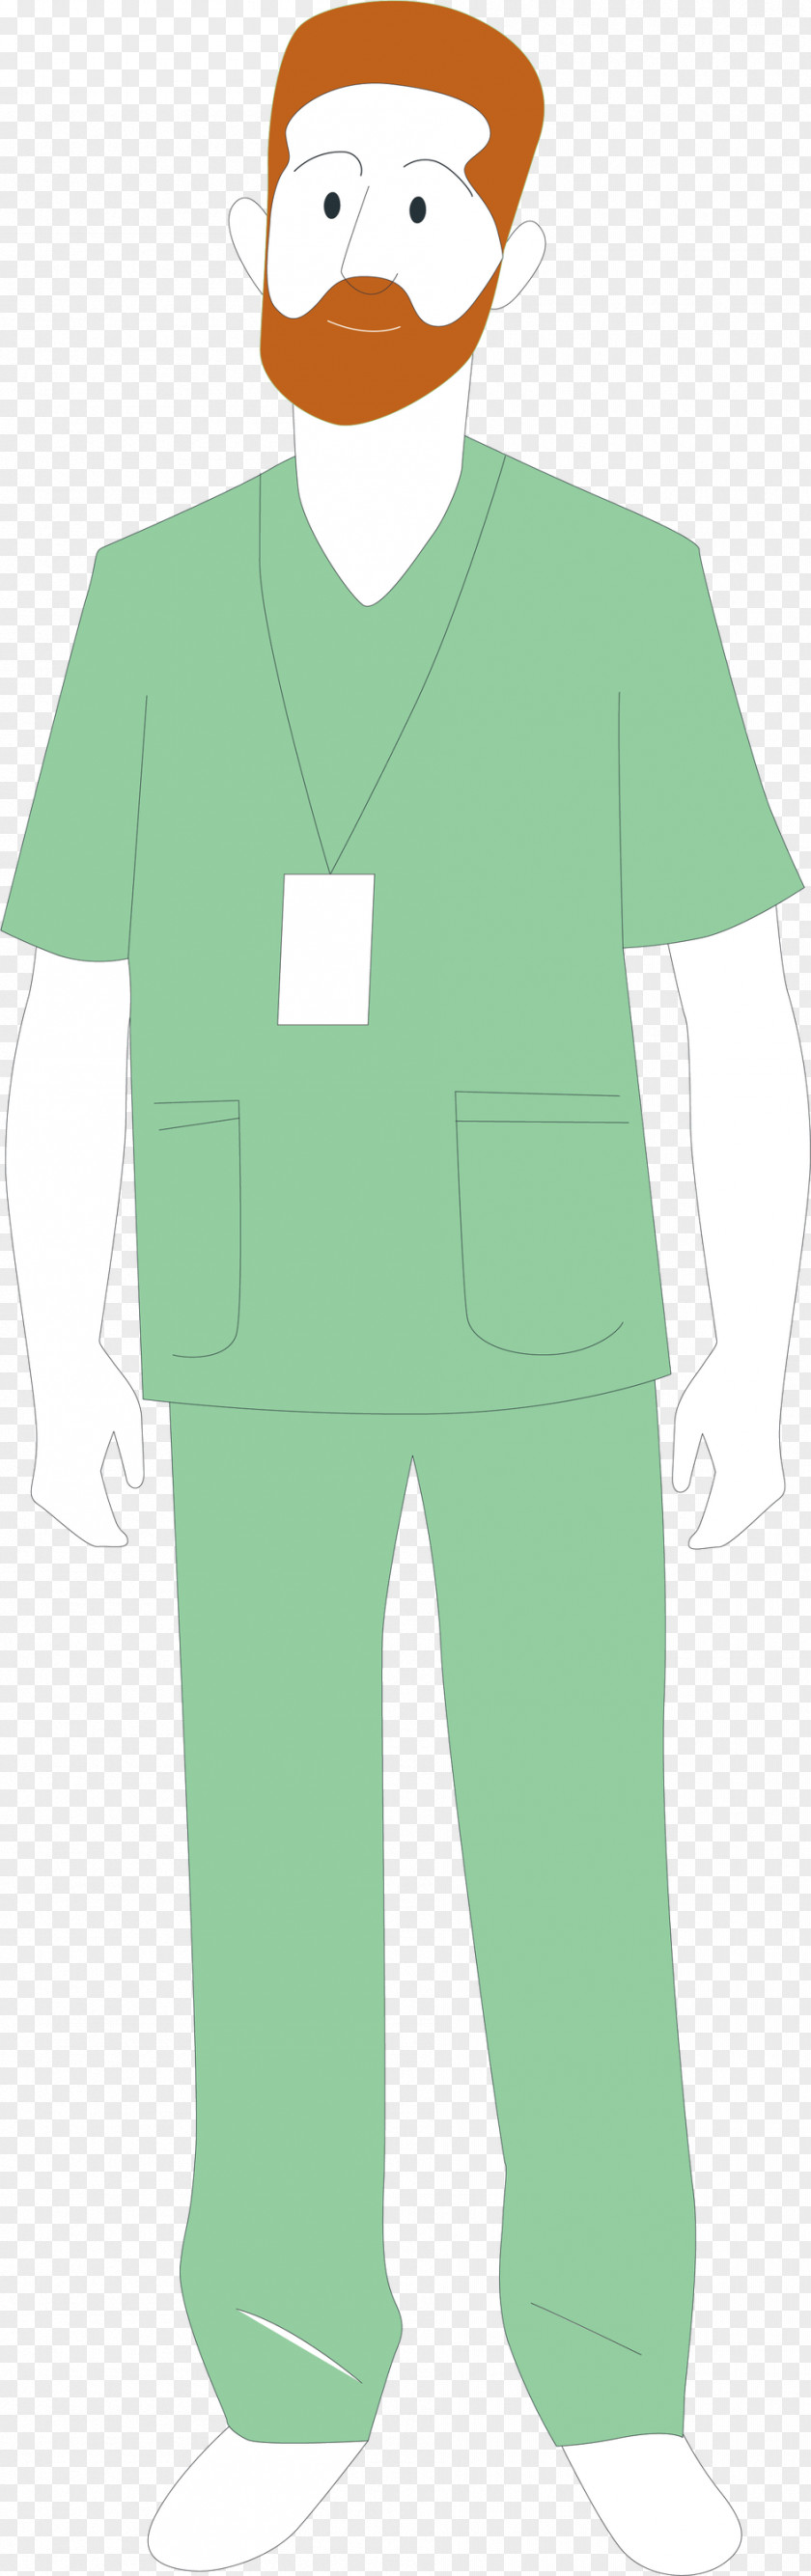 Hat Character Green Sleeve Uniform PNG